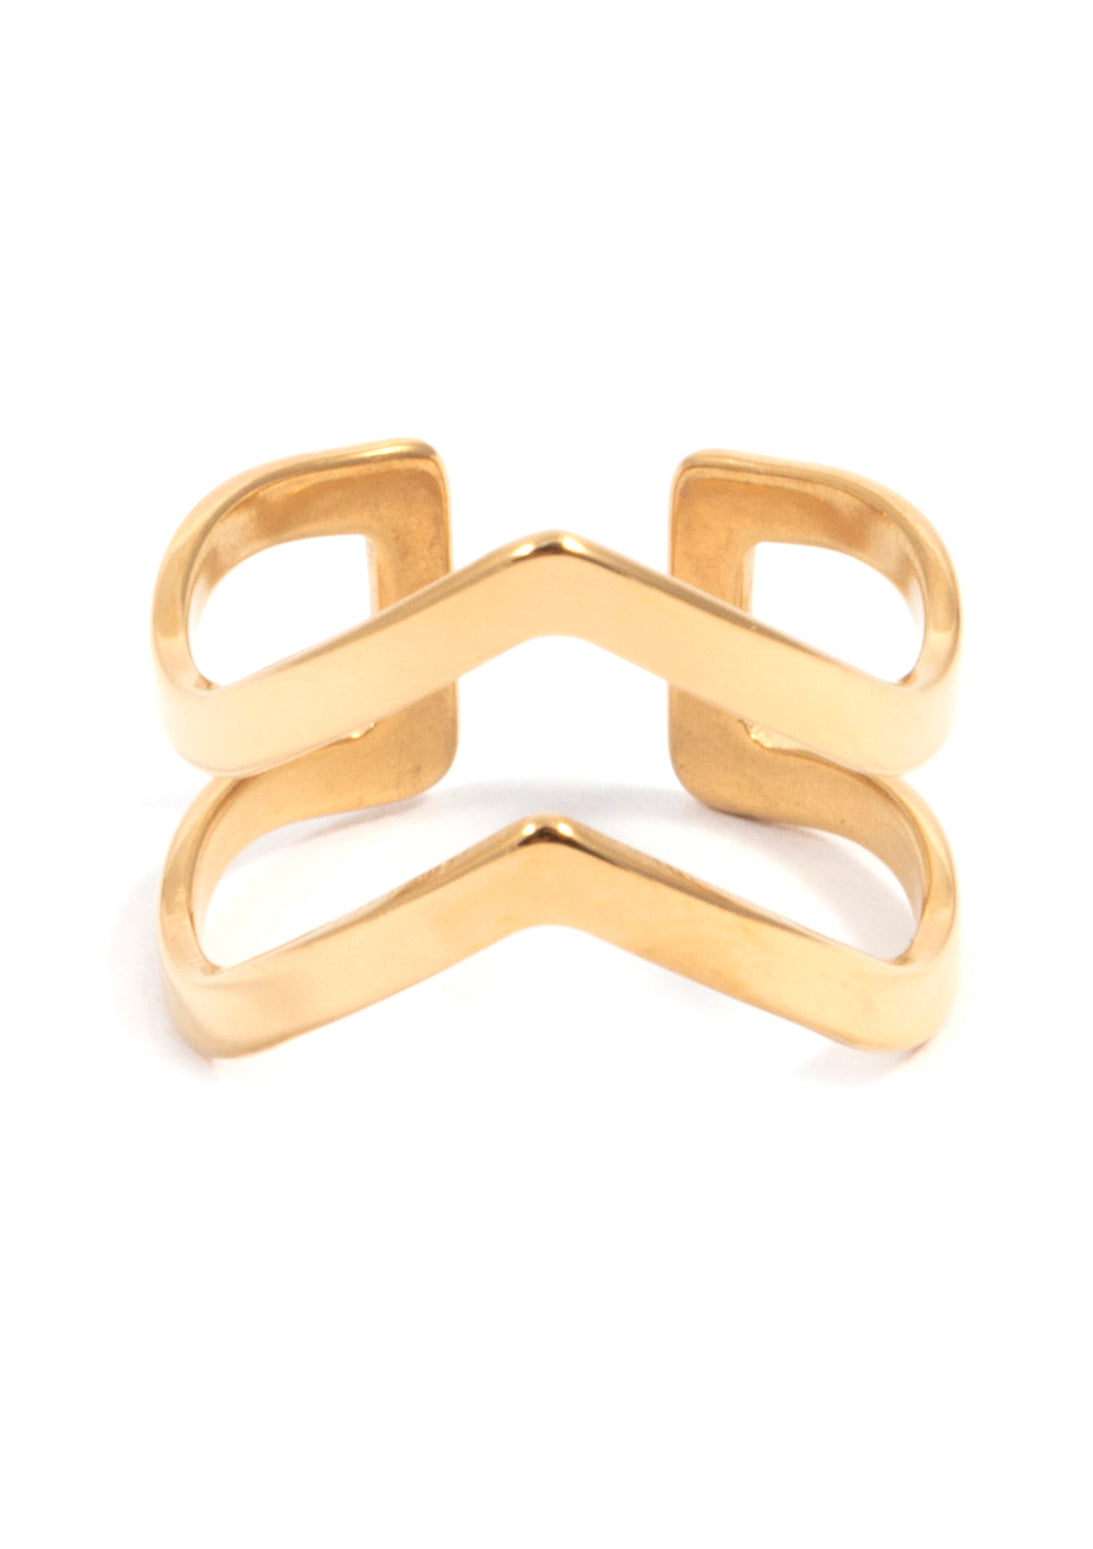 Doppel Chevron Ring in Gold